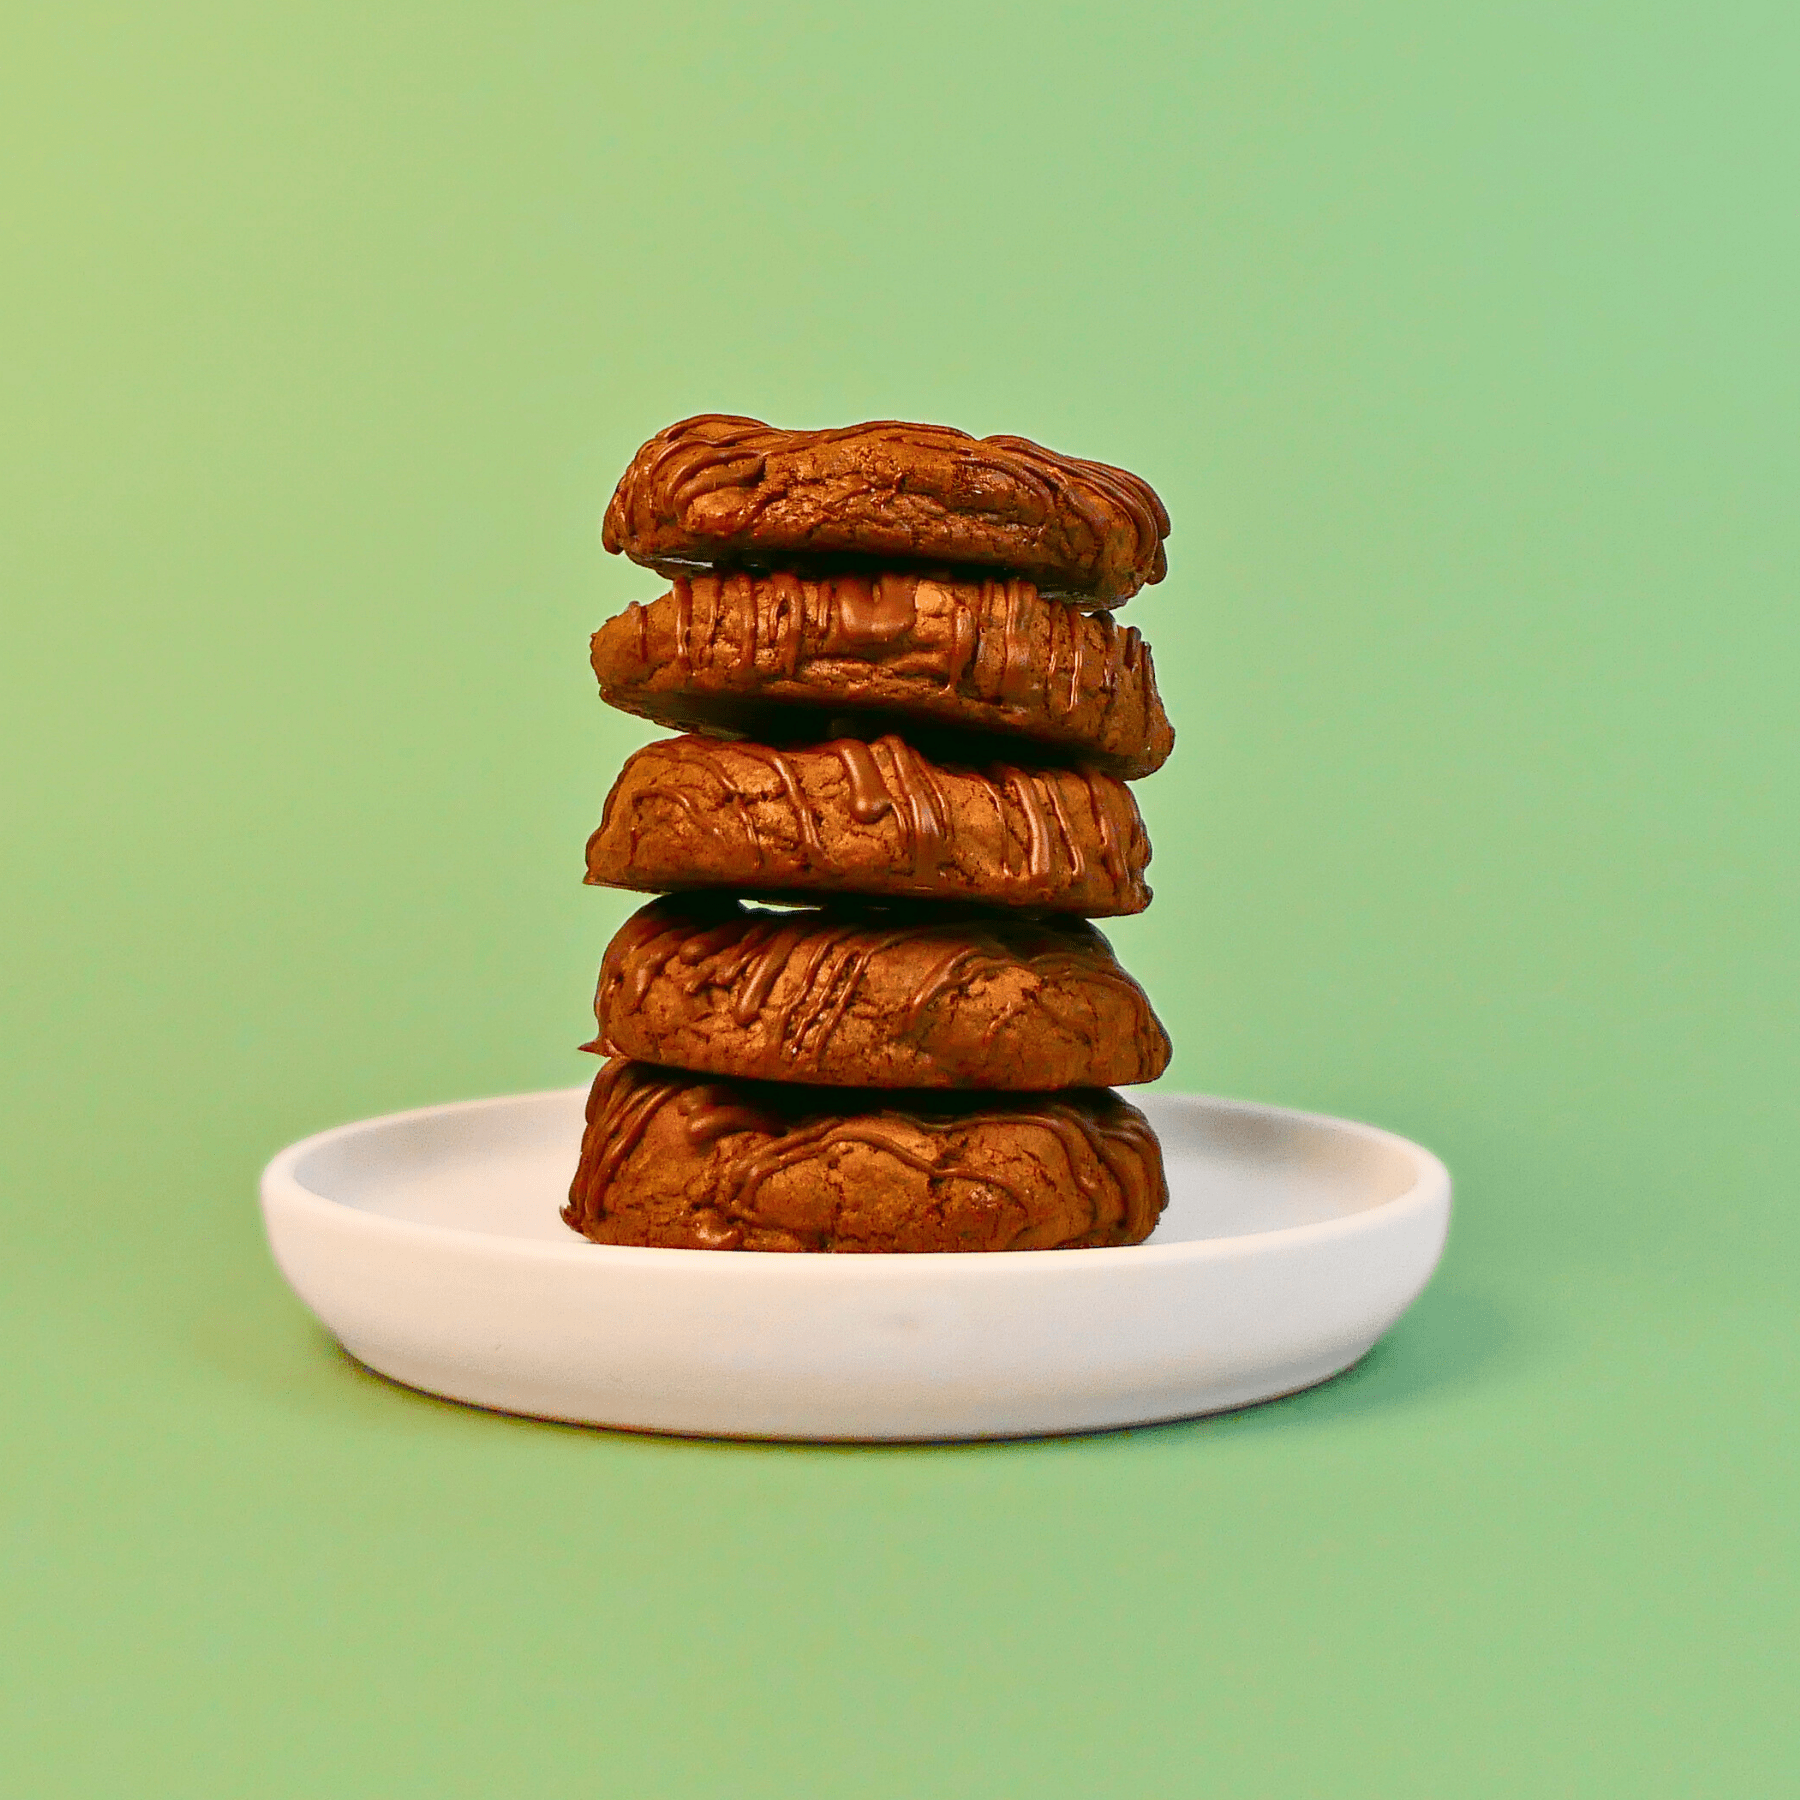 Chocolate Bliss Cookies